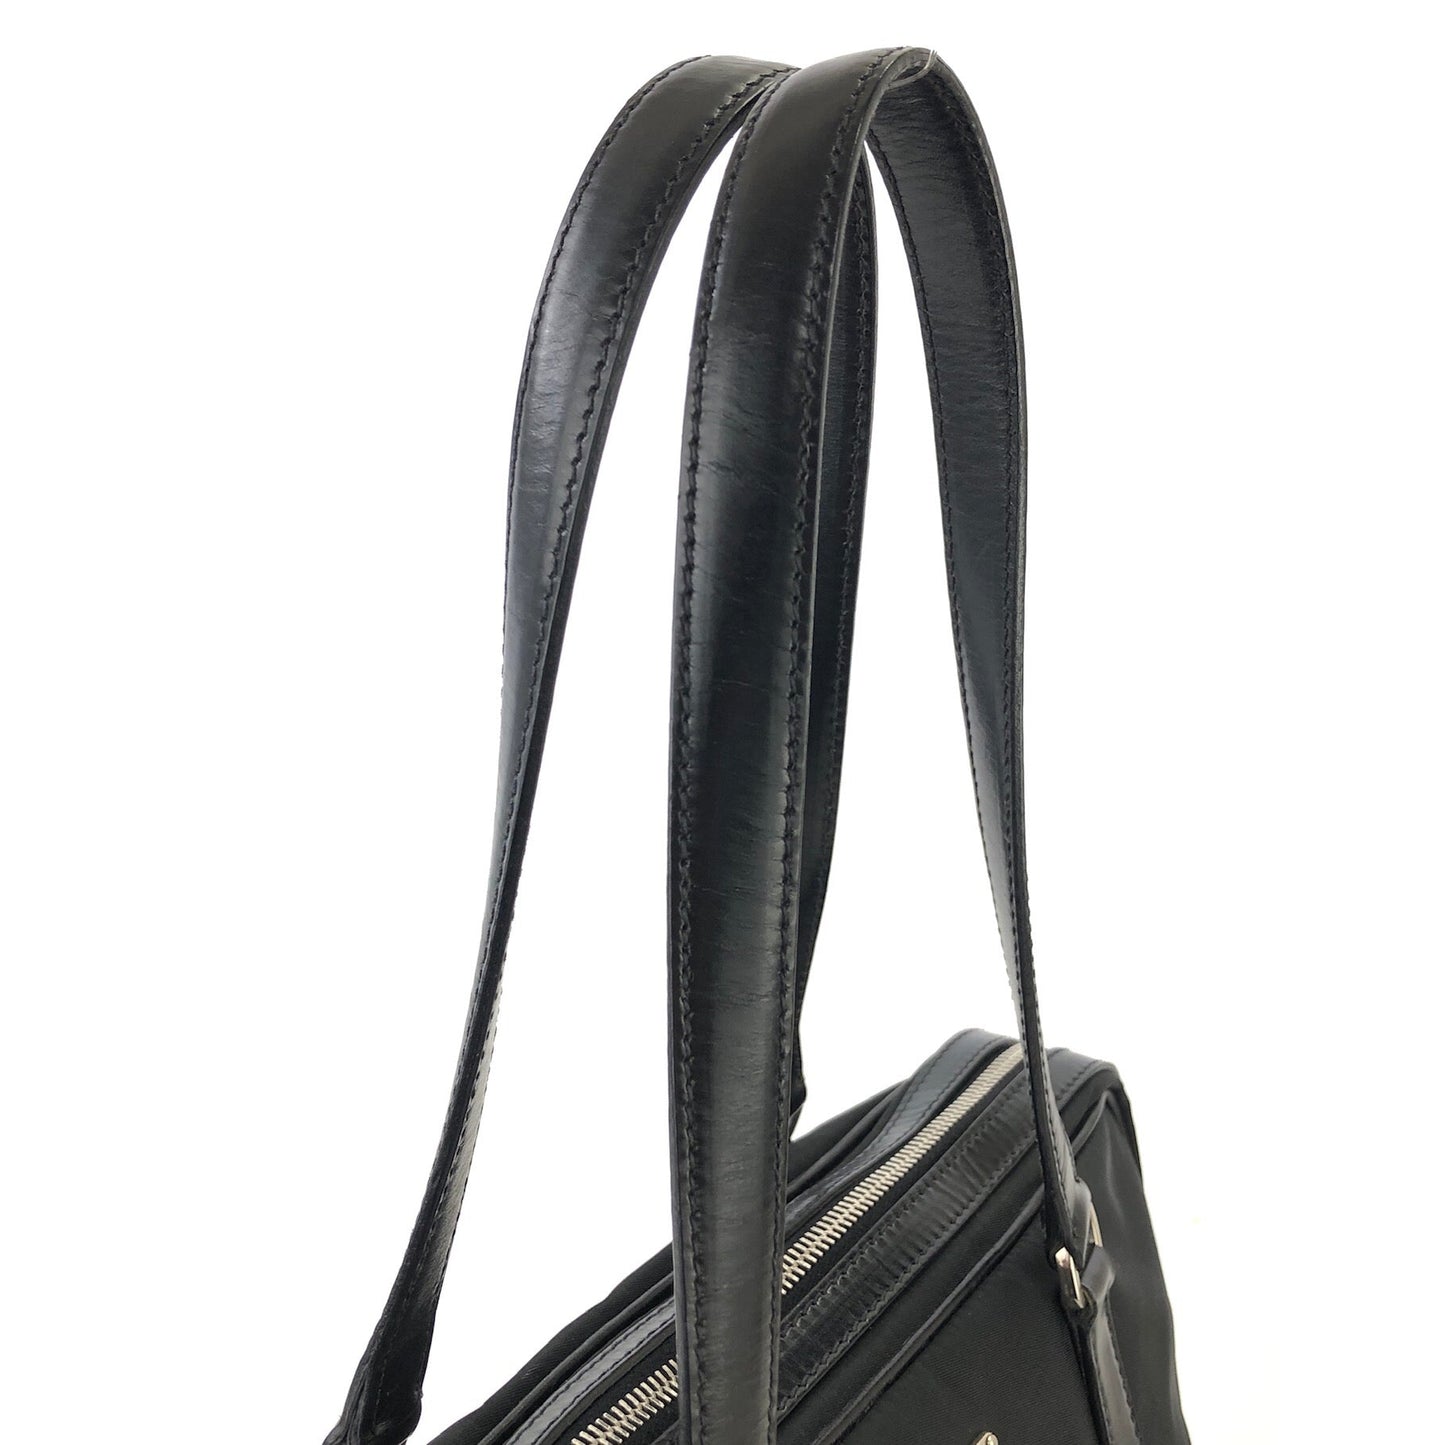 PRADA Triangle logo Nylon Two-way Tote bag Shoulder bag Black Vintage utm6ke